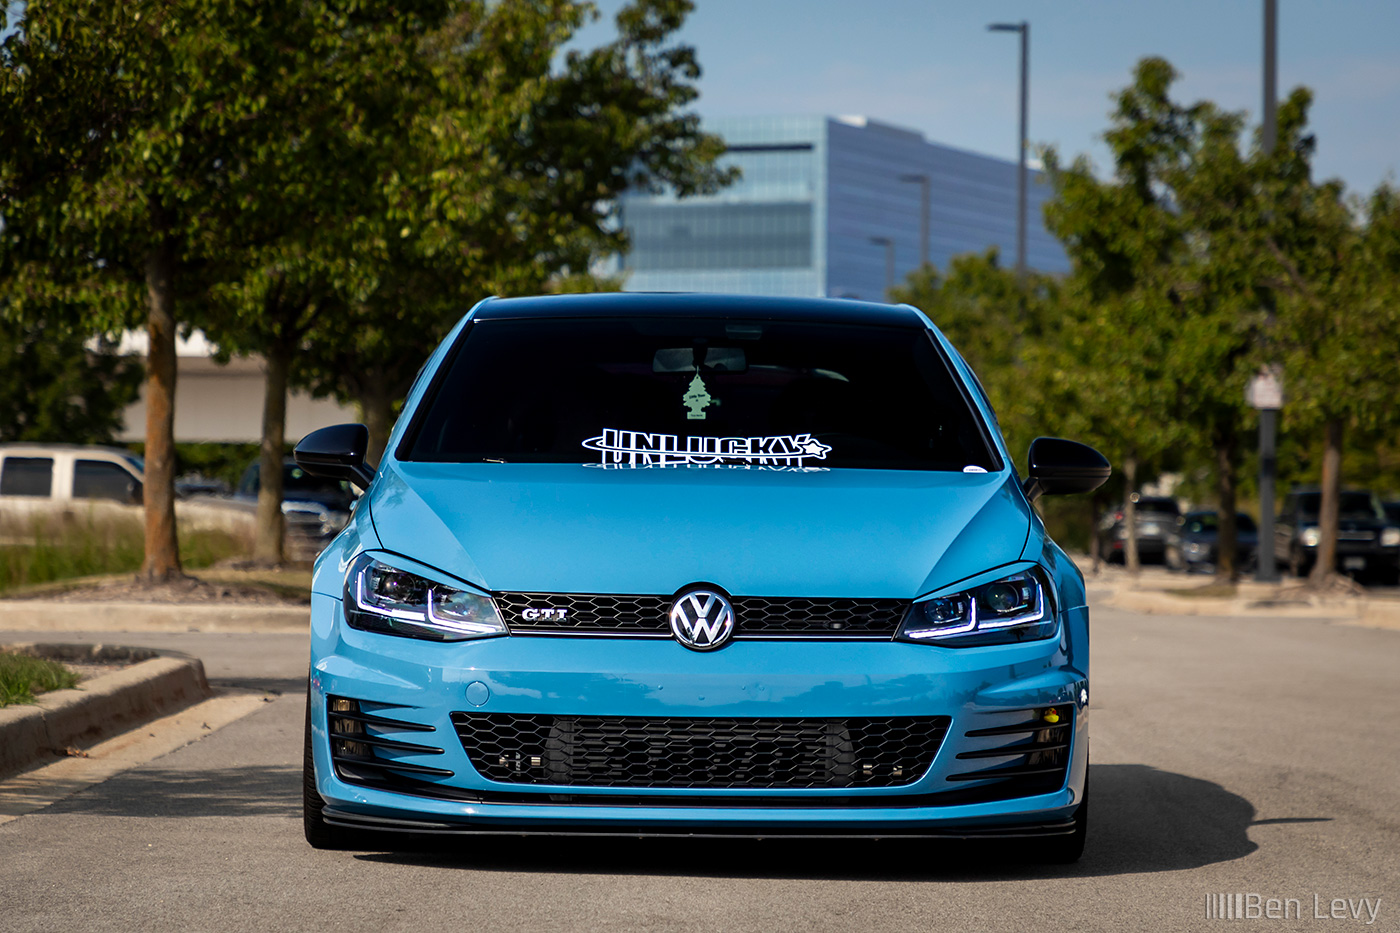 Front of Bagged, Blue Mk7 Volkswagen GTI